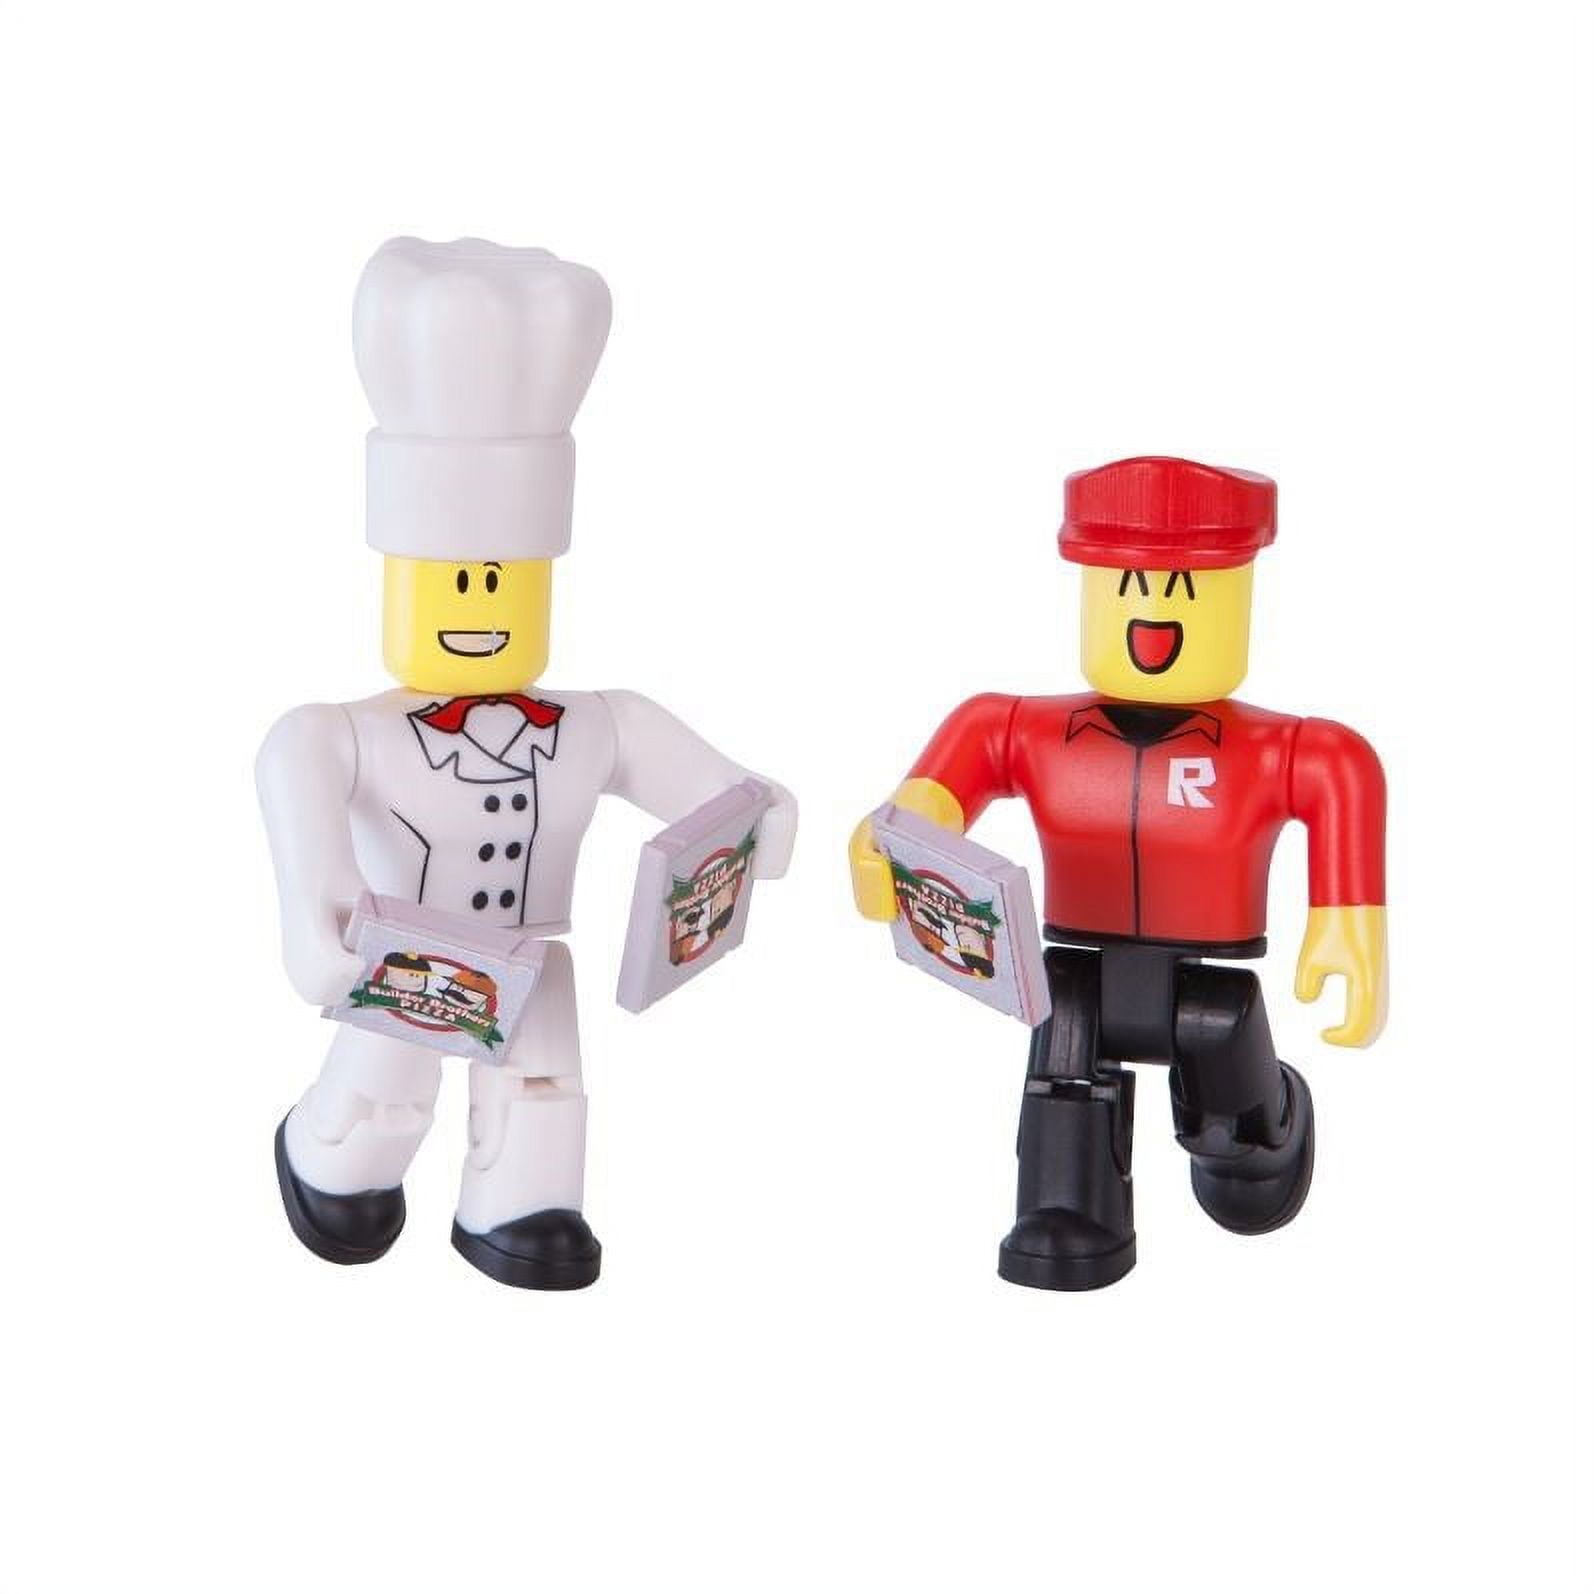 Chef Roblox Figure Cook Building Toy Figurine Mini figure